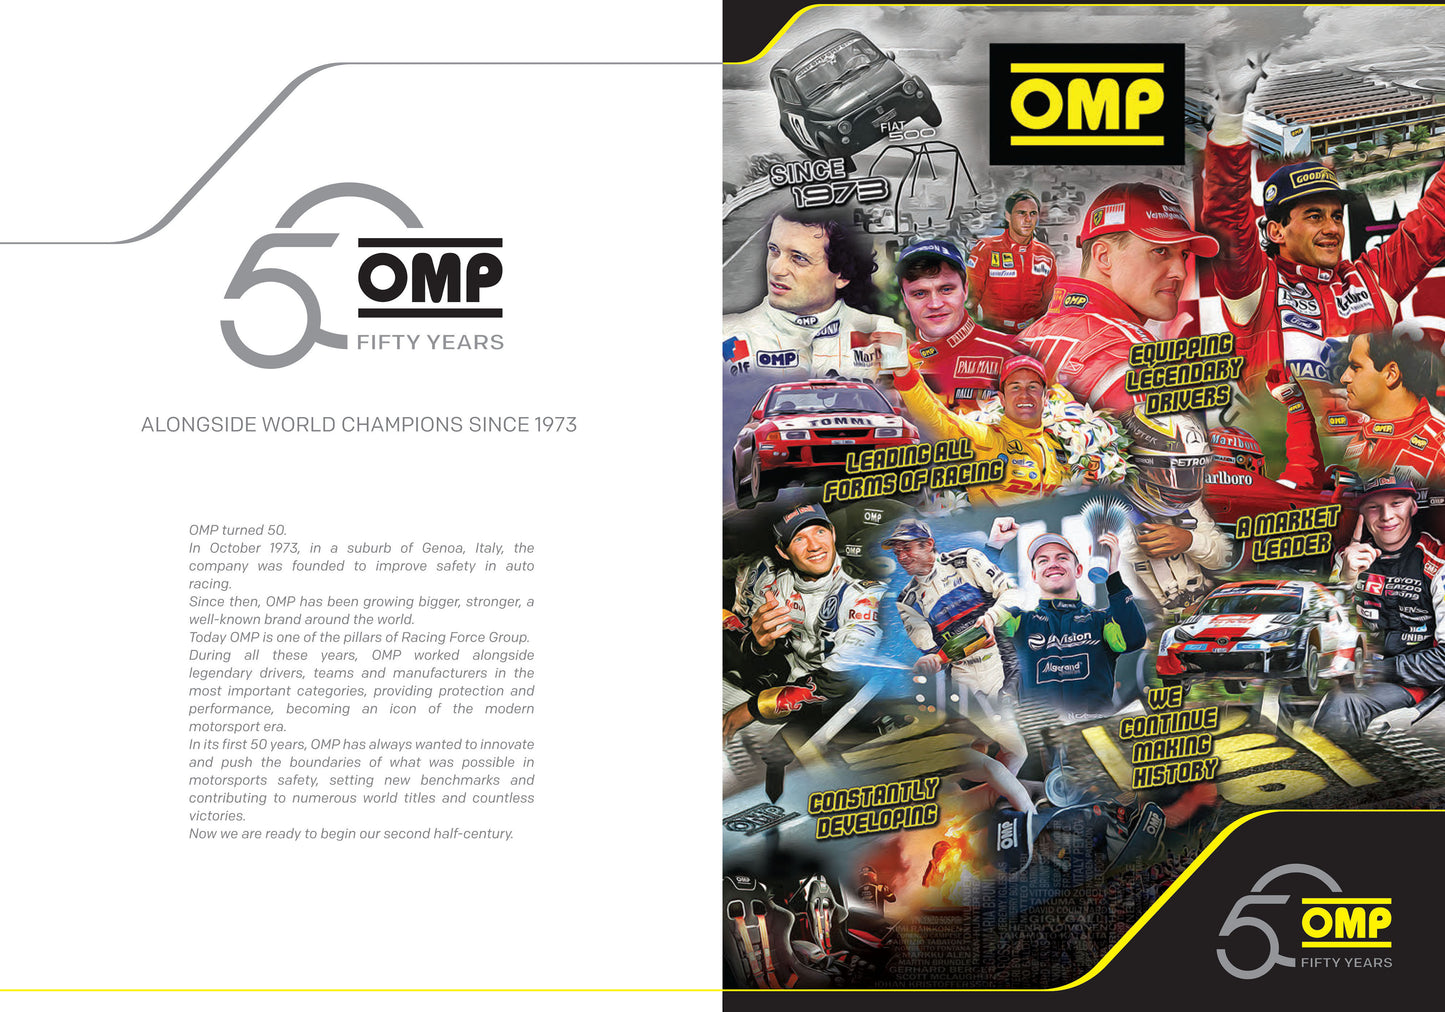 OD/1972/N OMP FORMULA QUADRO RACING STEERING WHEEL 250x230mm SINGLE SEATER RACE